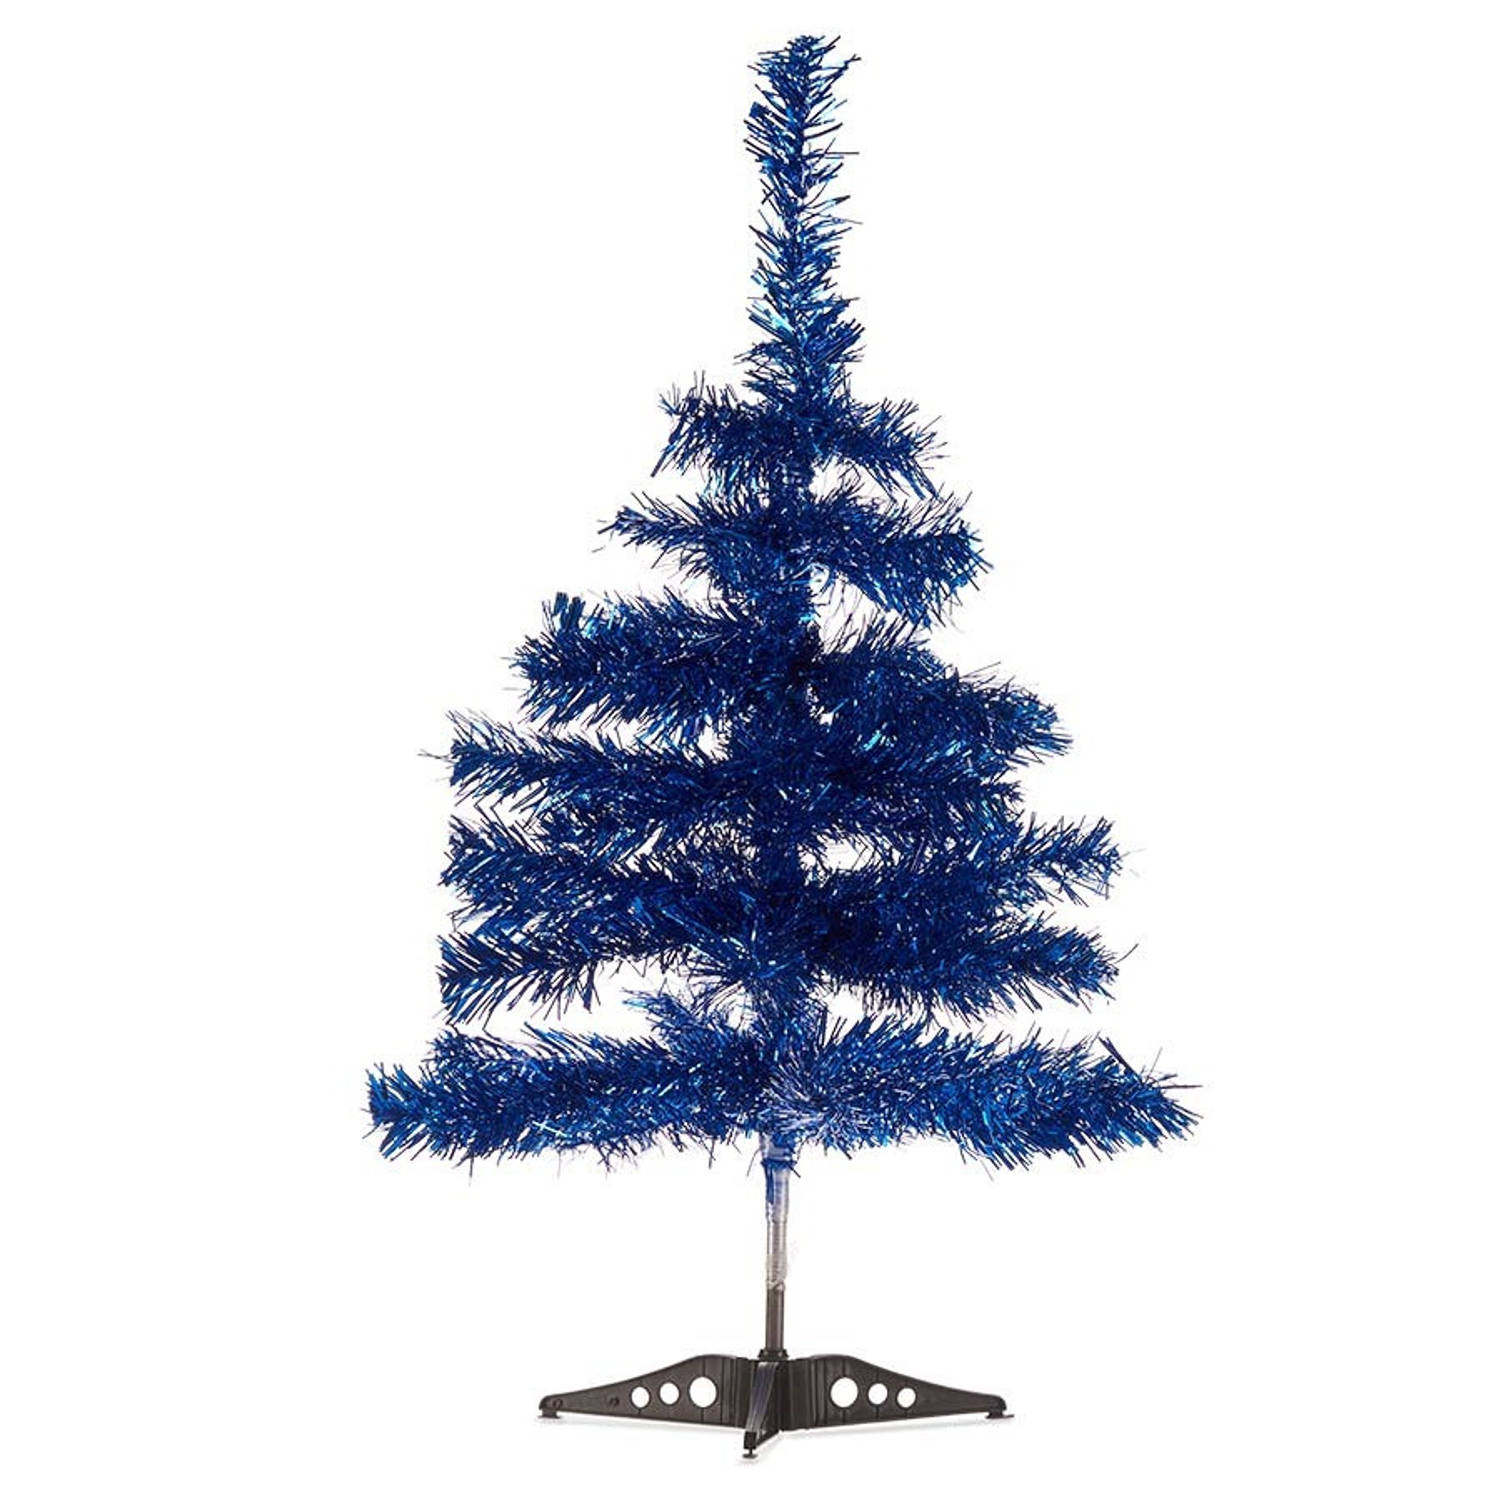 Krist+ kunst kerstboom - klein - blauw - 60 cm - Kunstkerstboom